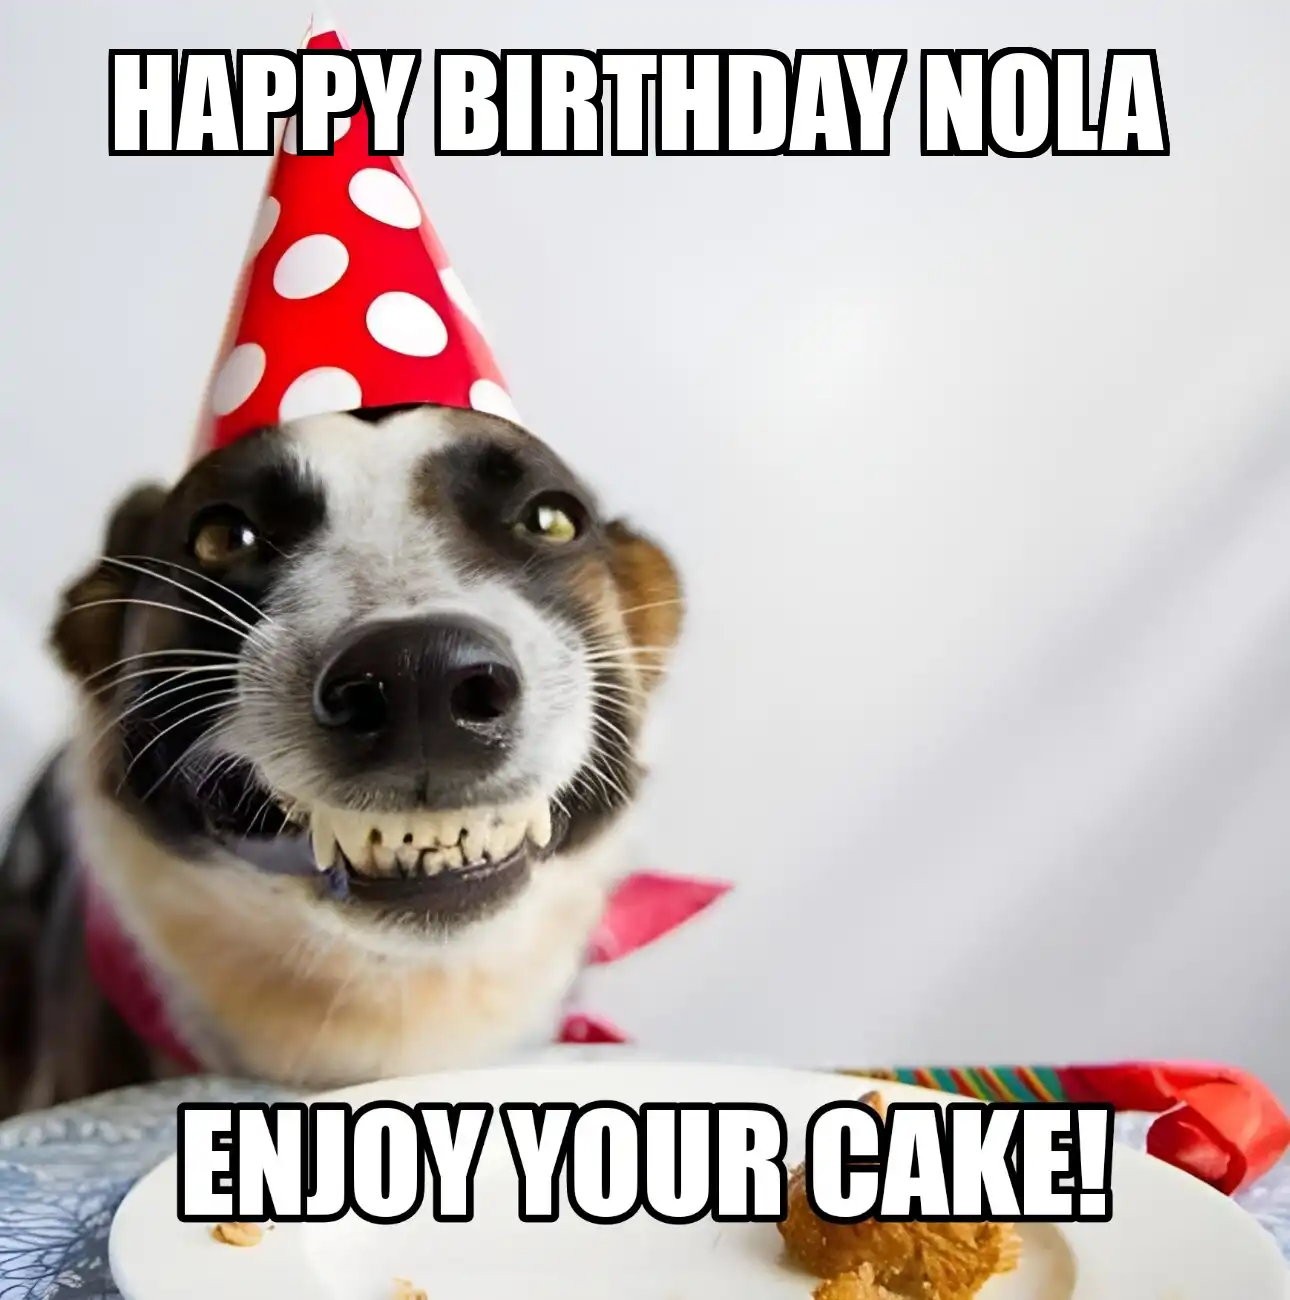 Happy Birthday Nola Enjoy Your Cake Dog Meme